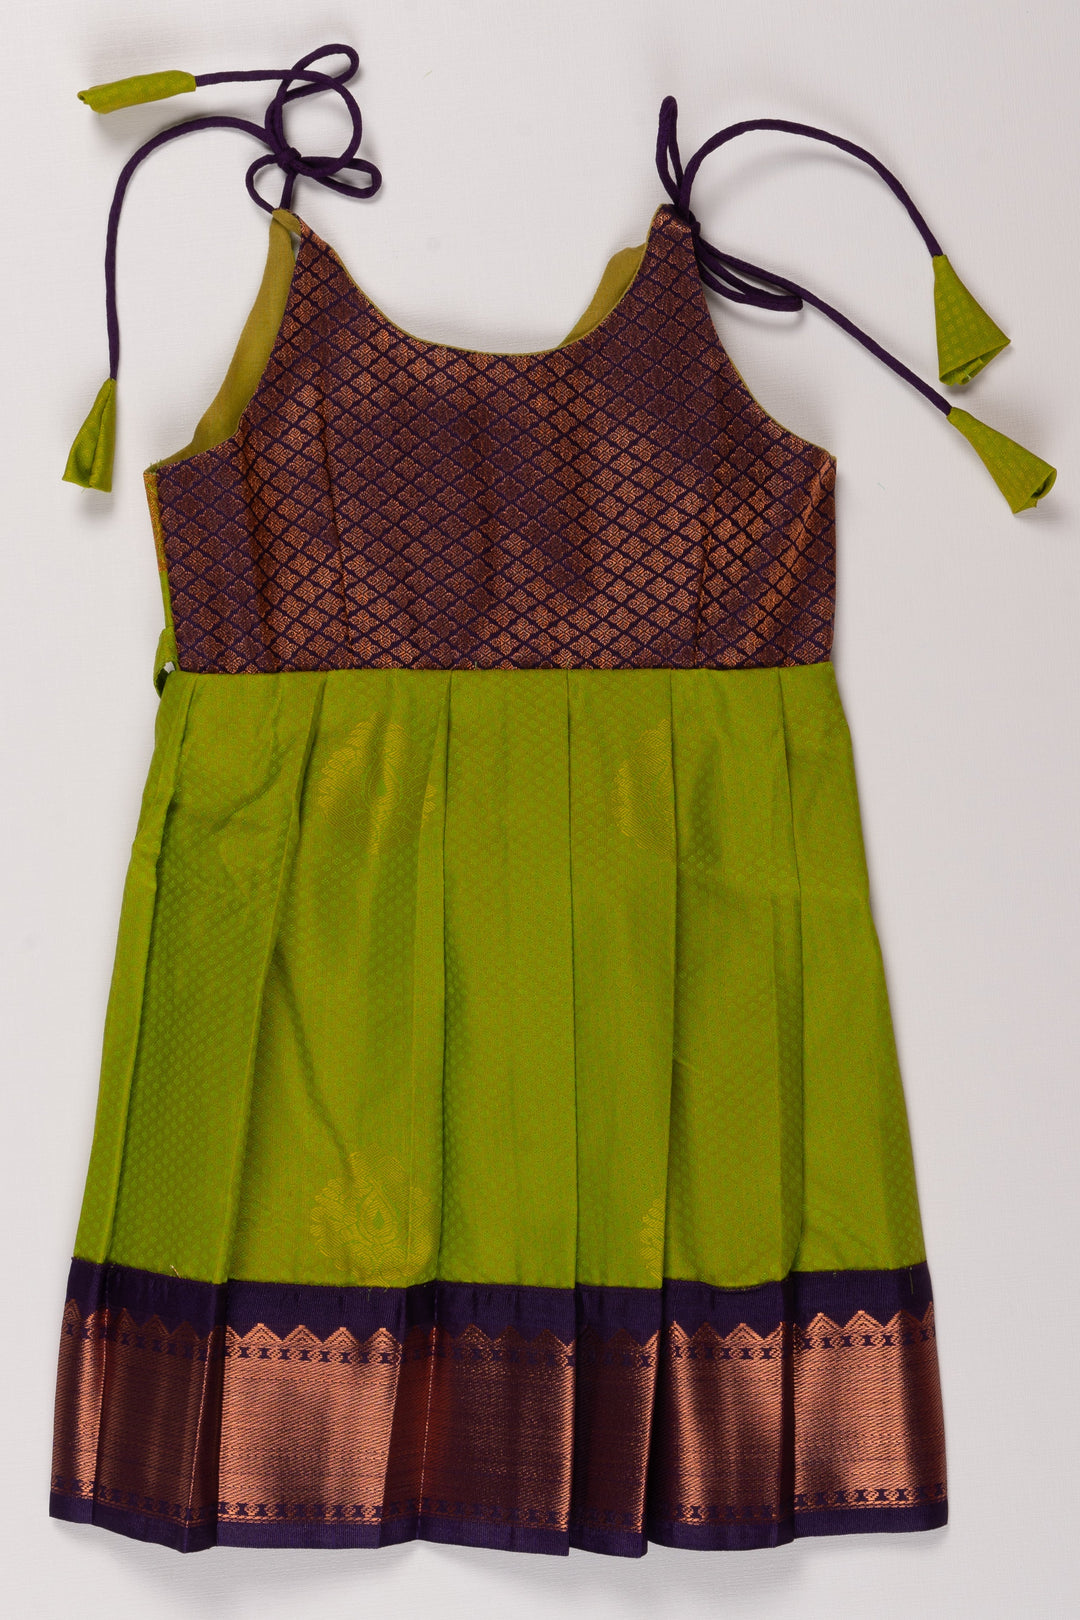 The Nesavu Tie Up Frock Citrus Charm Green Brocade Silk TieUp Frock - Vibrant Elegance Nesavu 14 (6M) / Green / Style 4 T335D-14 Brocade Silk Frock in Lime Green | Festive & Fashion-Forward | The Nesavu